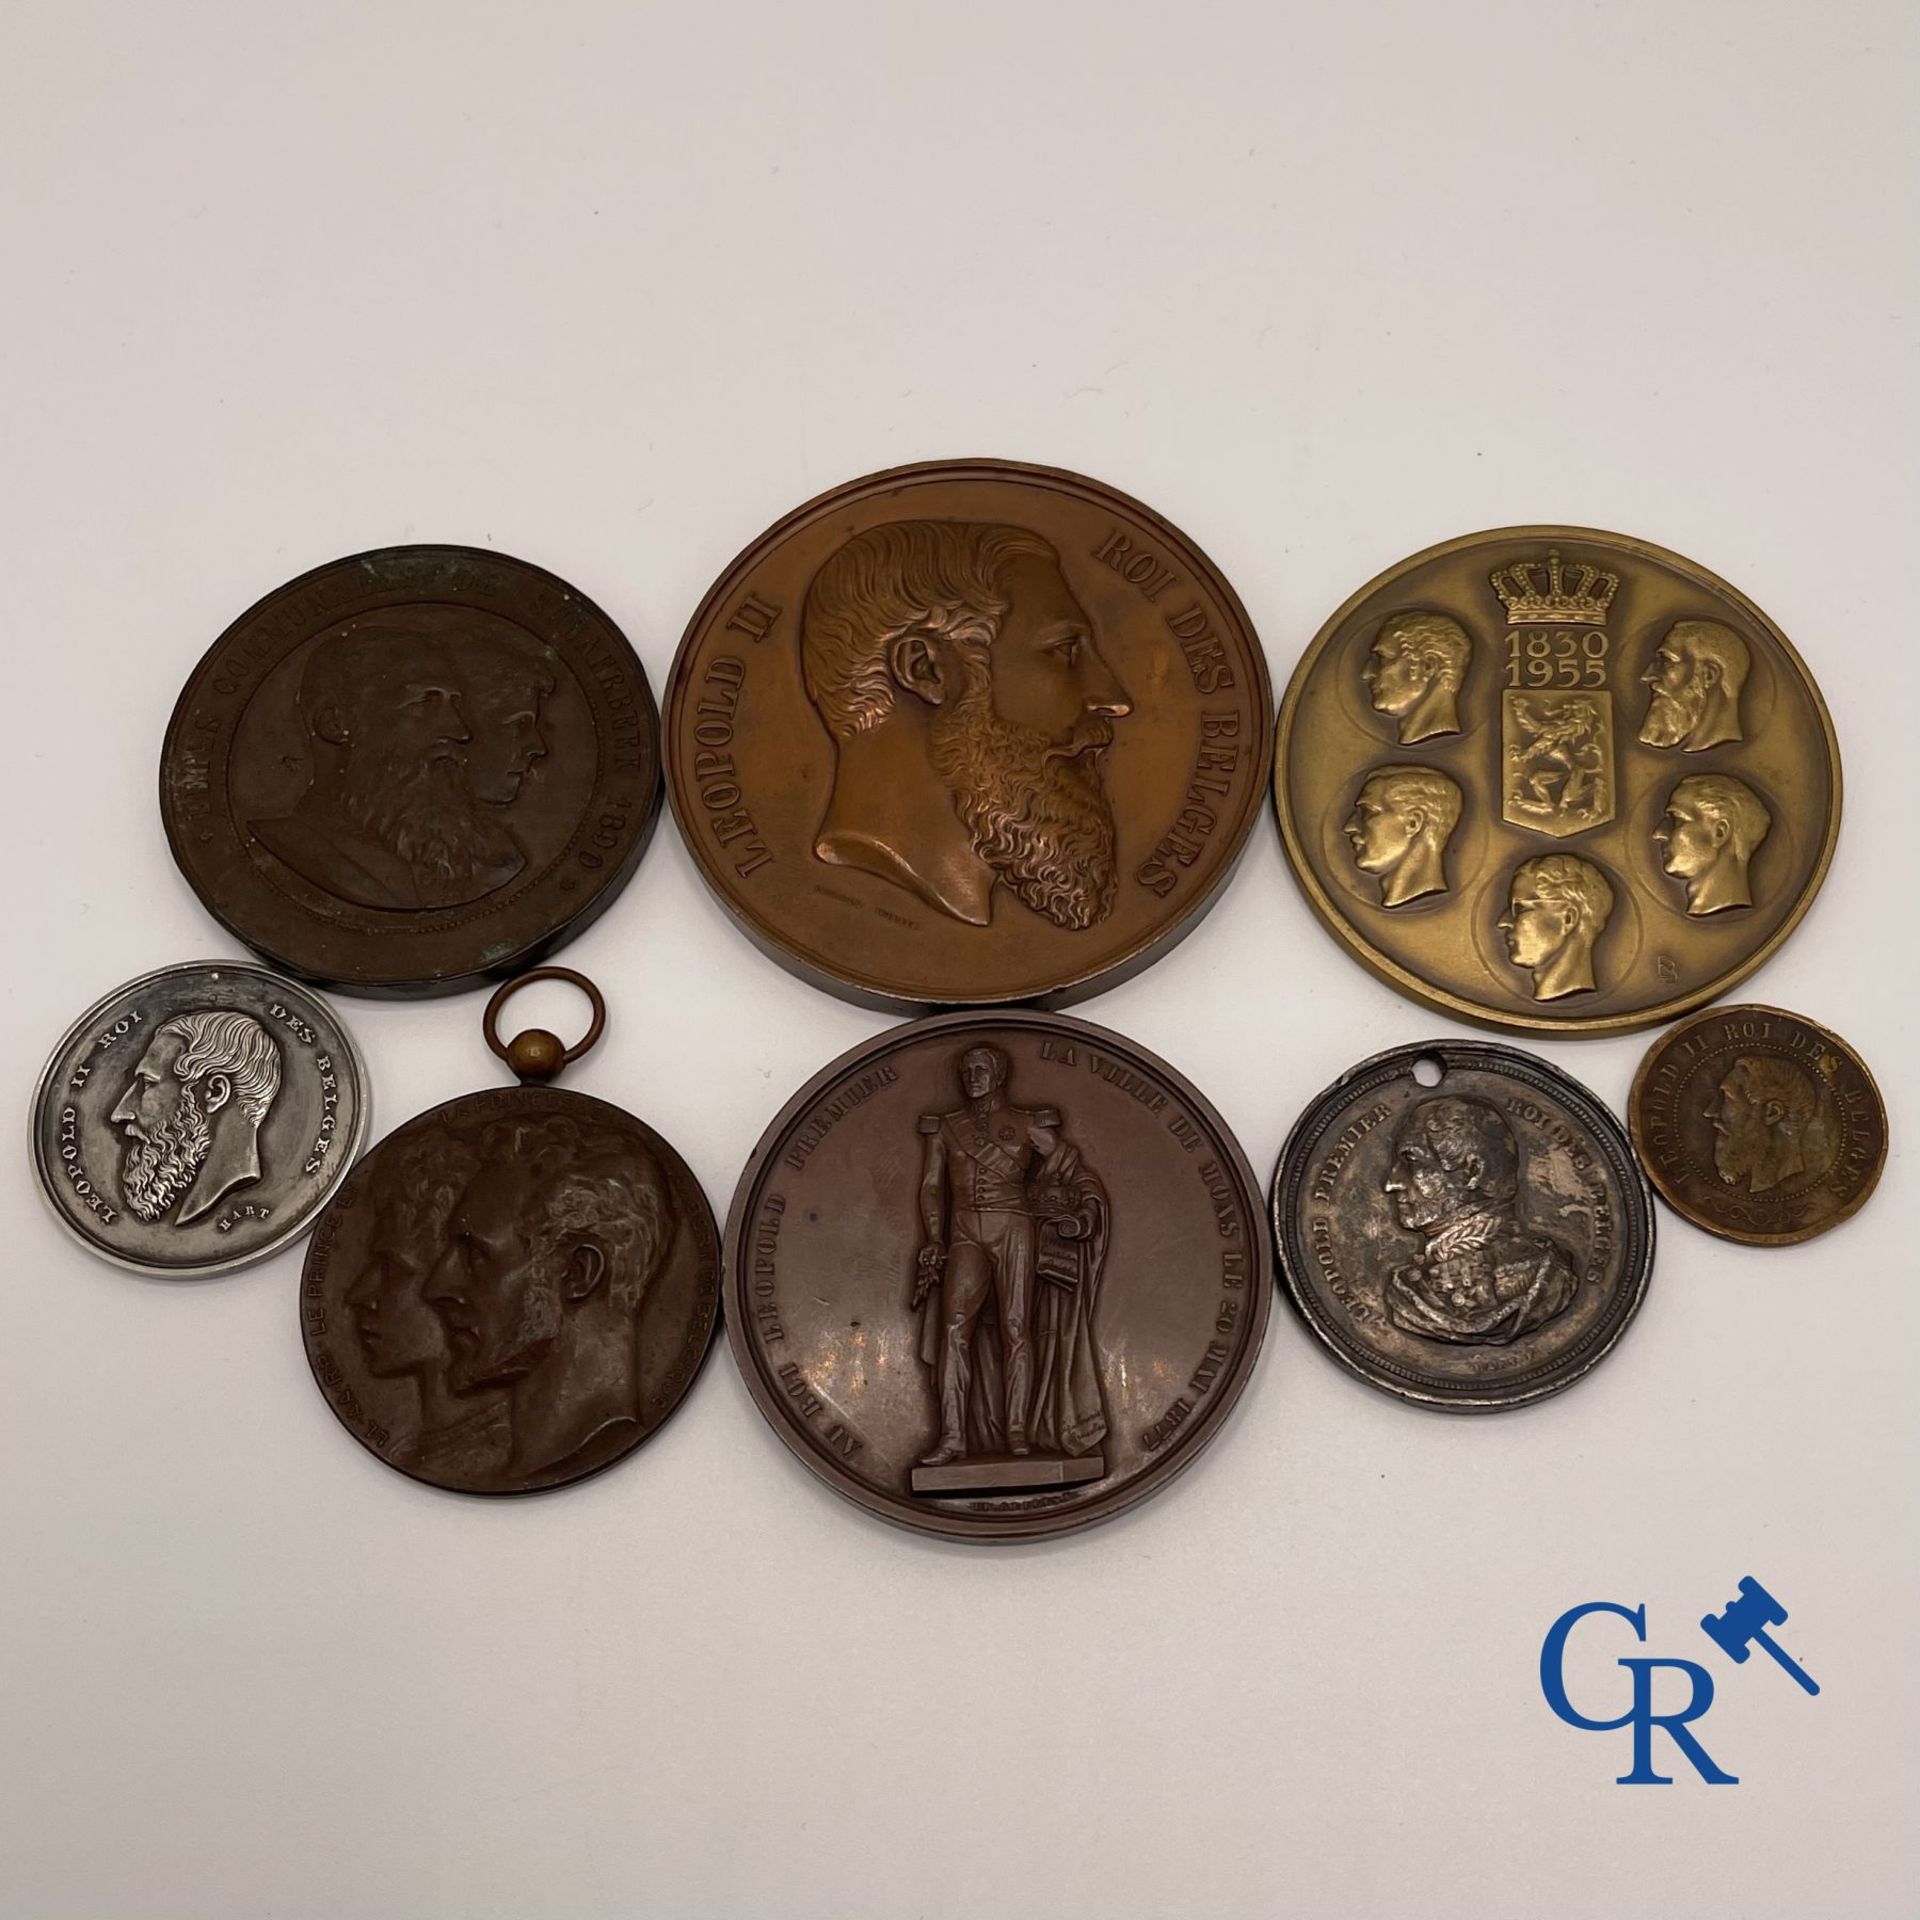 Commemorative Medals: Lot of 8 medals depicting Belgian monarchs.